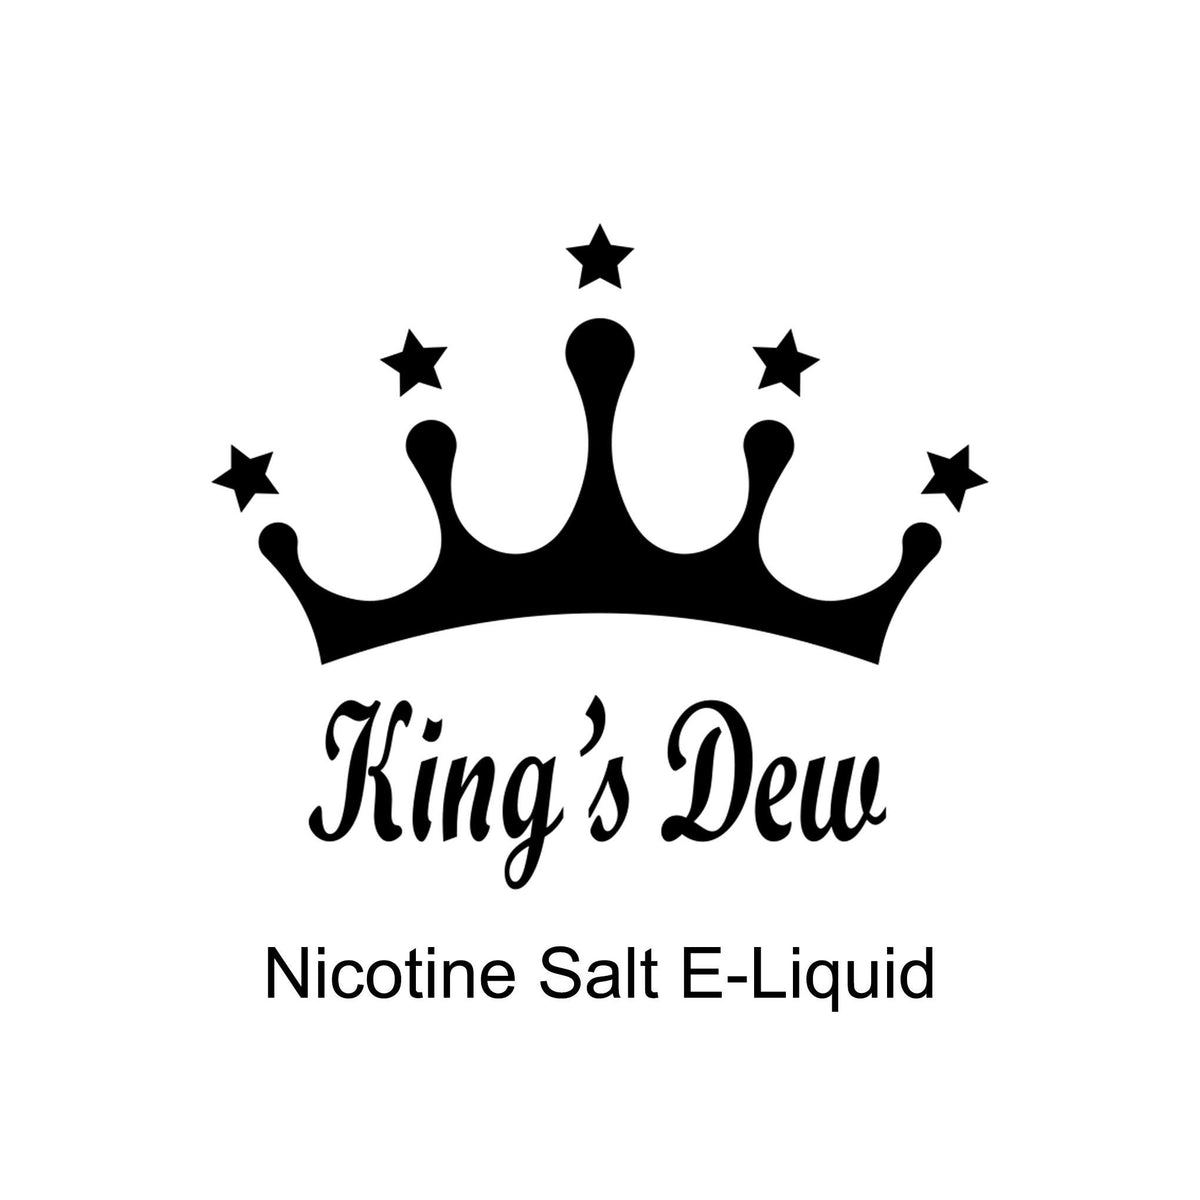 King's Dew Nicotine Salt E-Liquid